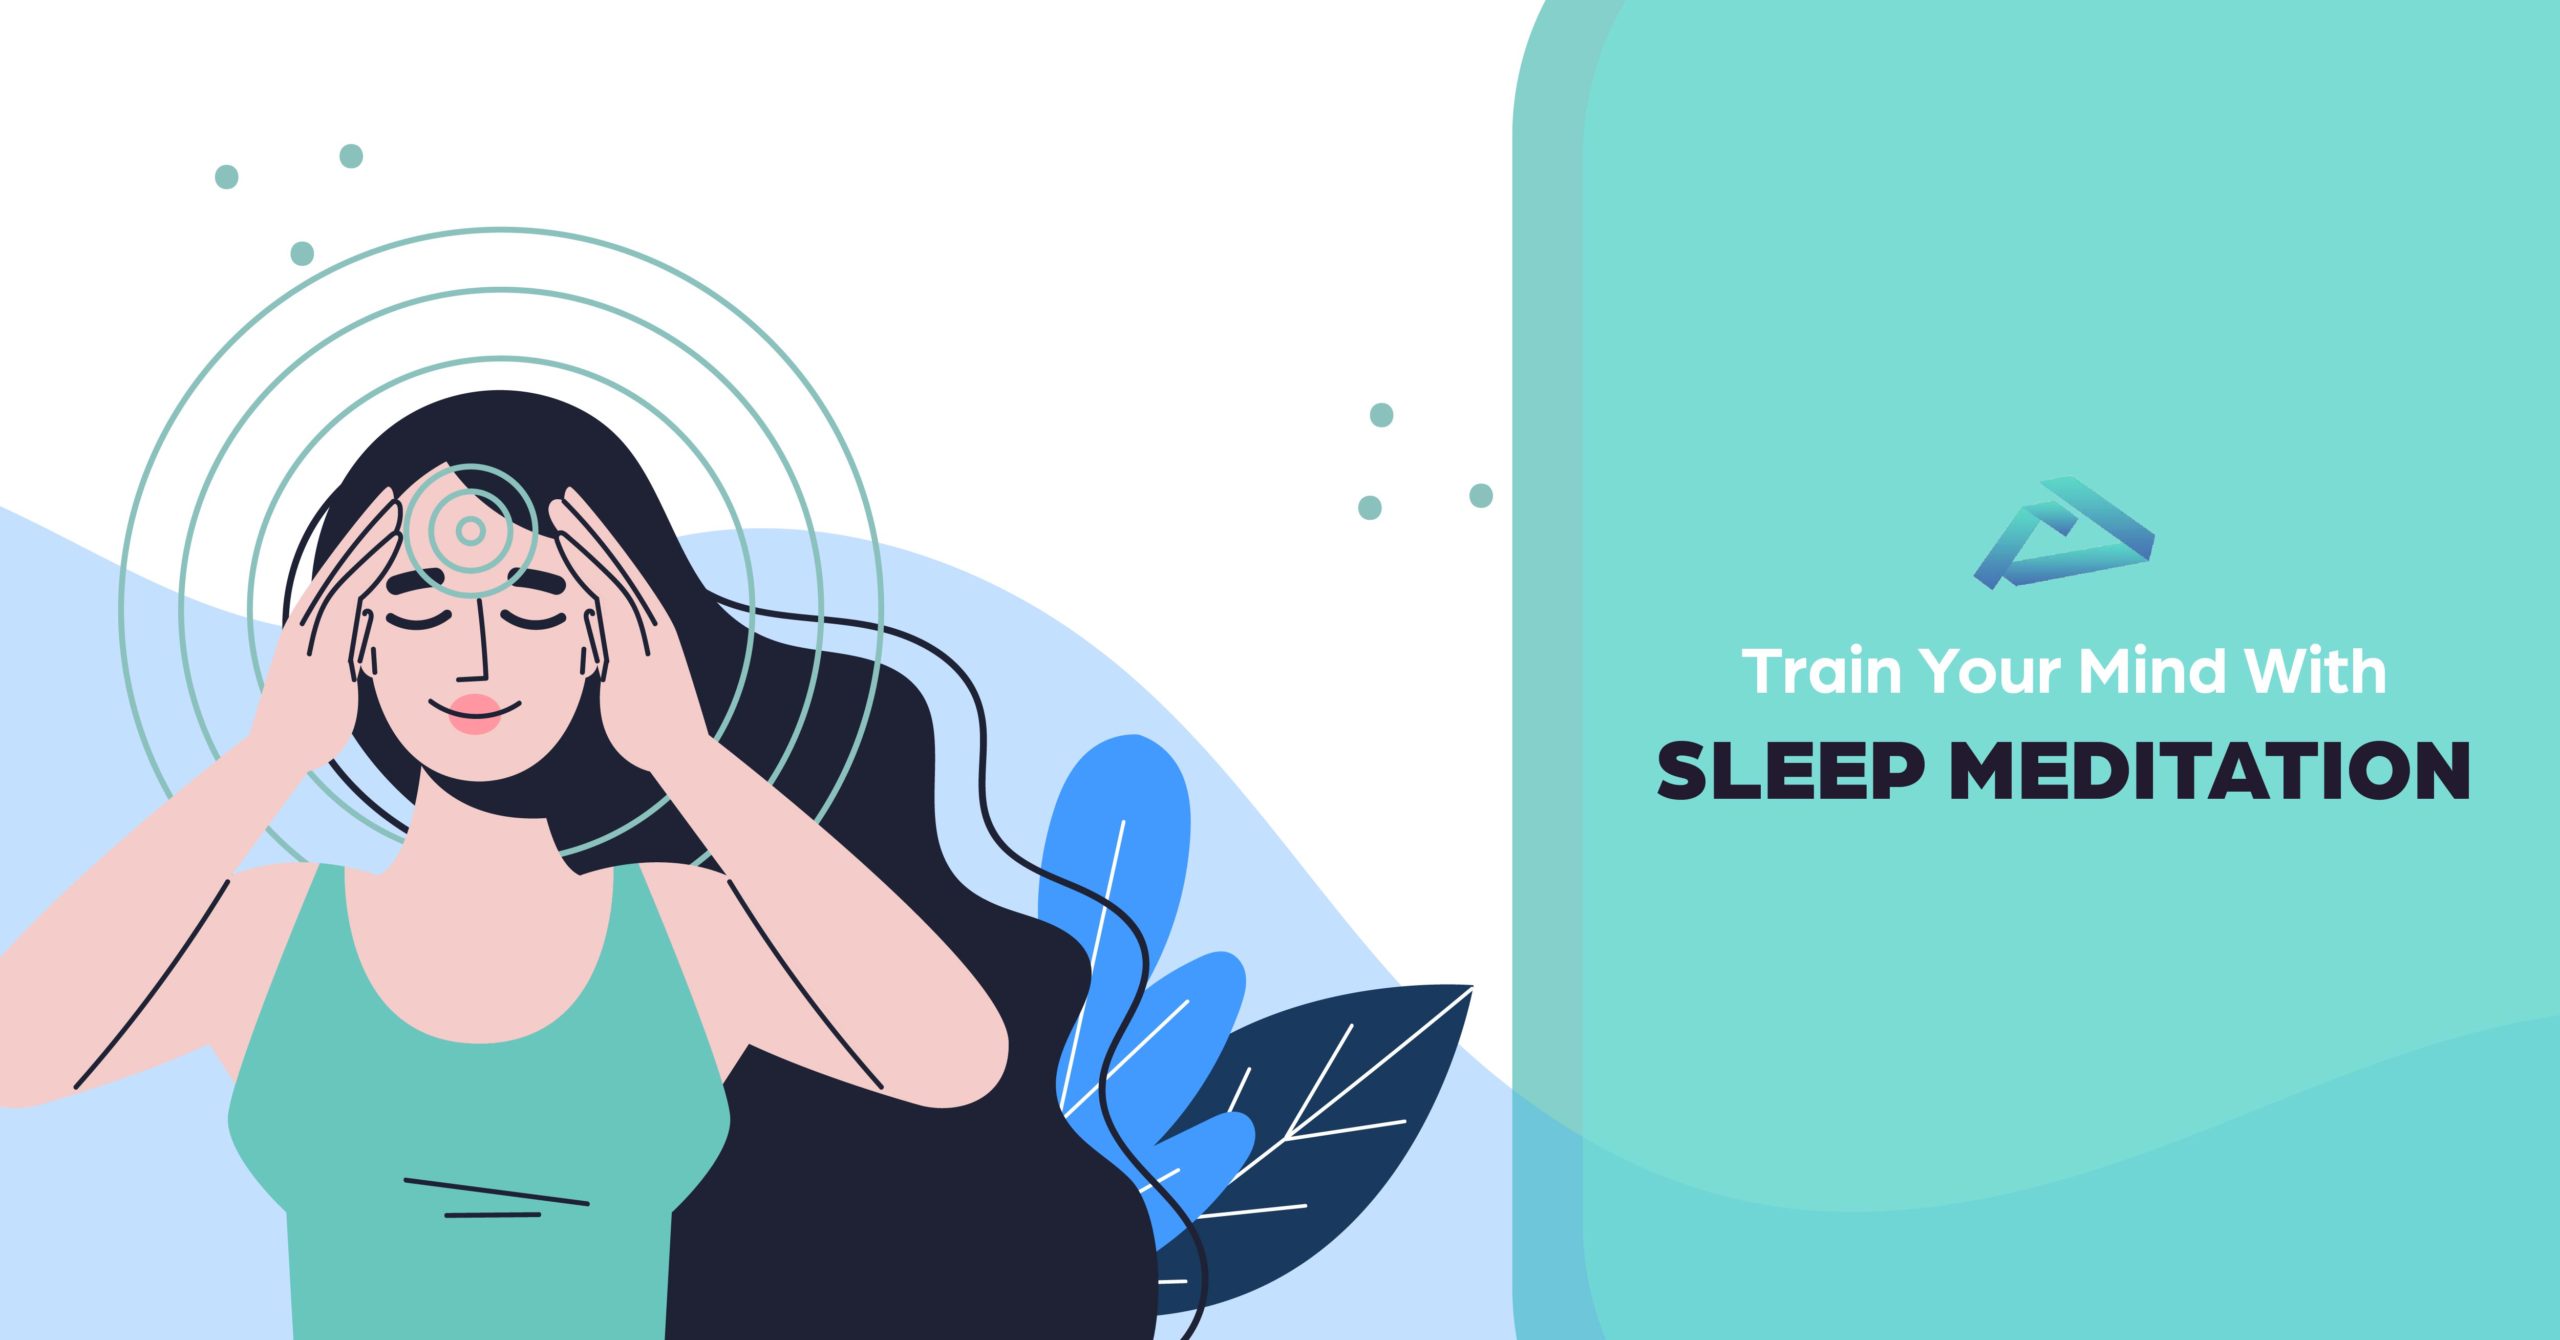 Train your mind with sleep meditation